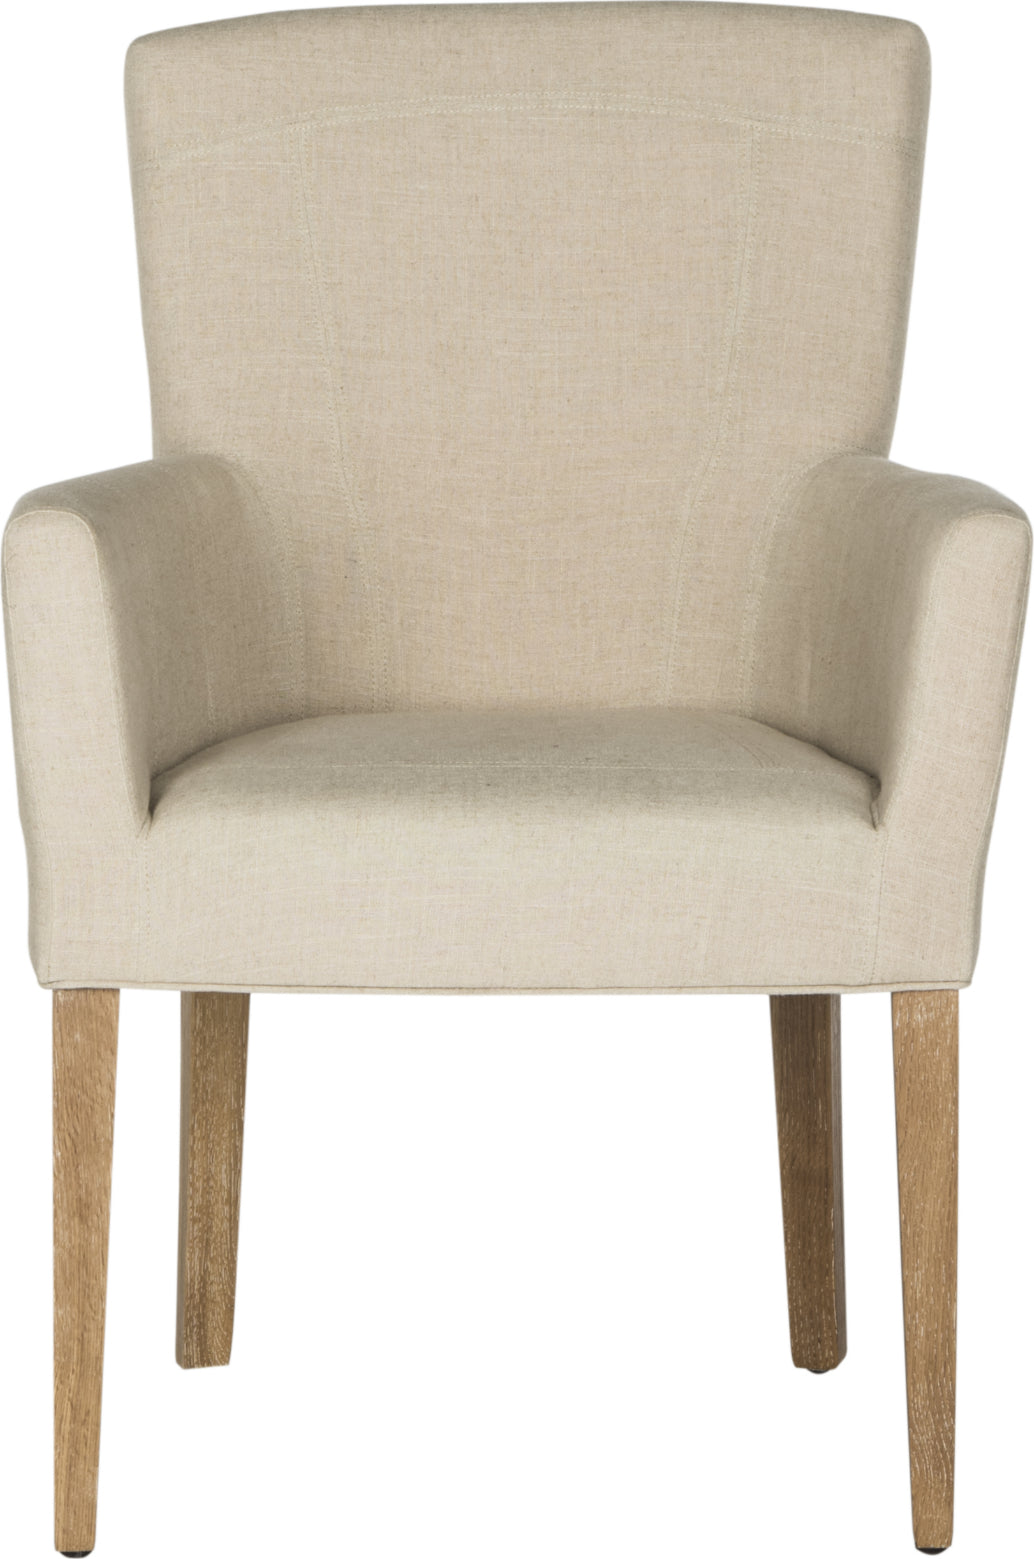 Safavieh Dale Arm Chair Hemp and White Wash Furniture main image